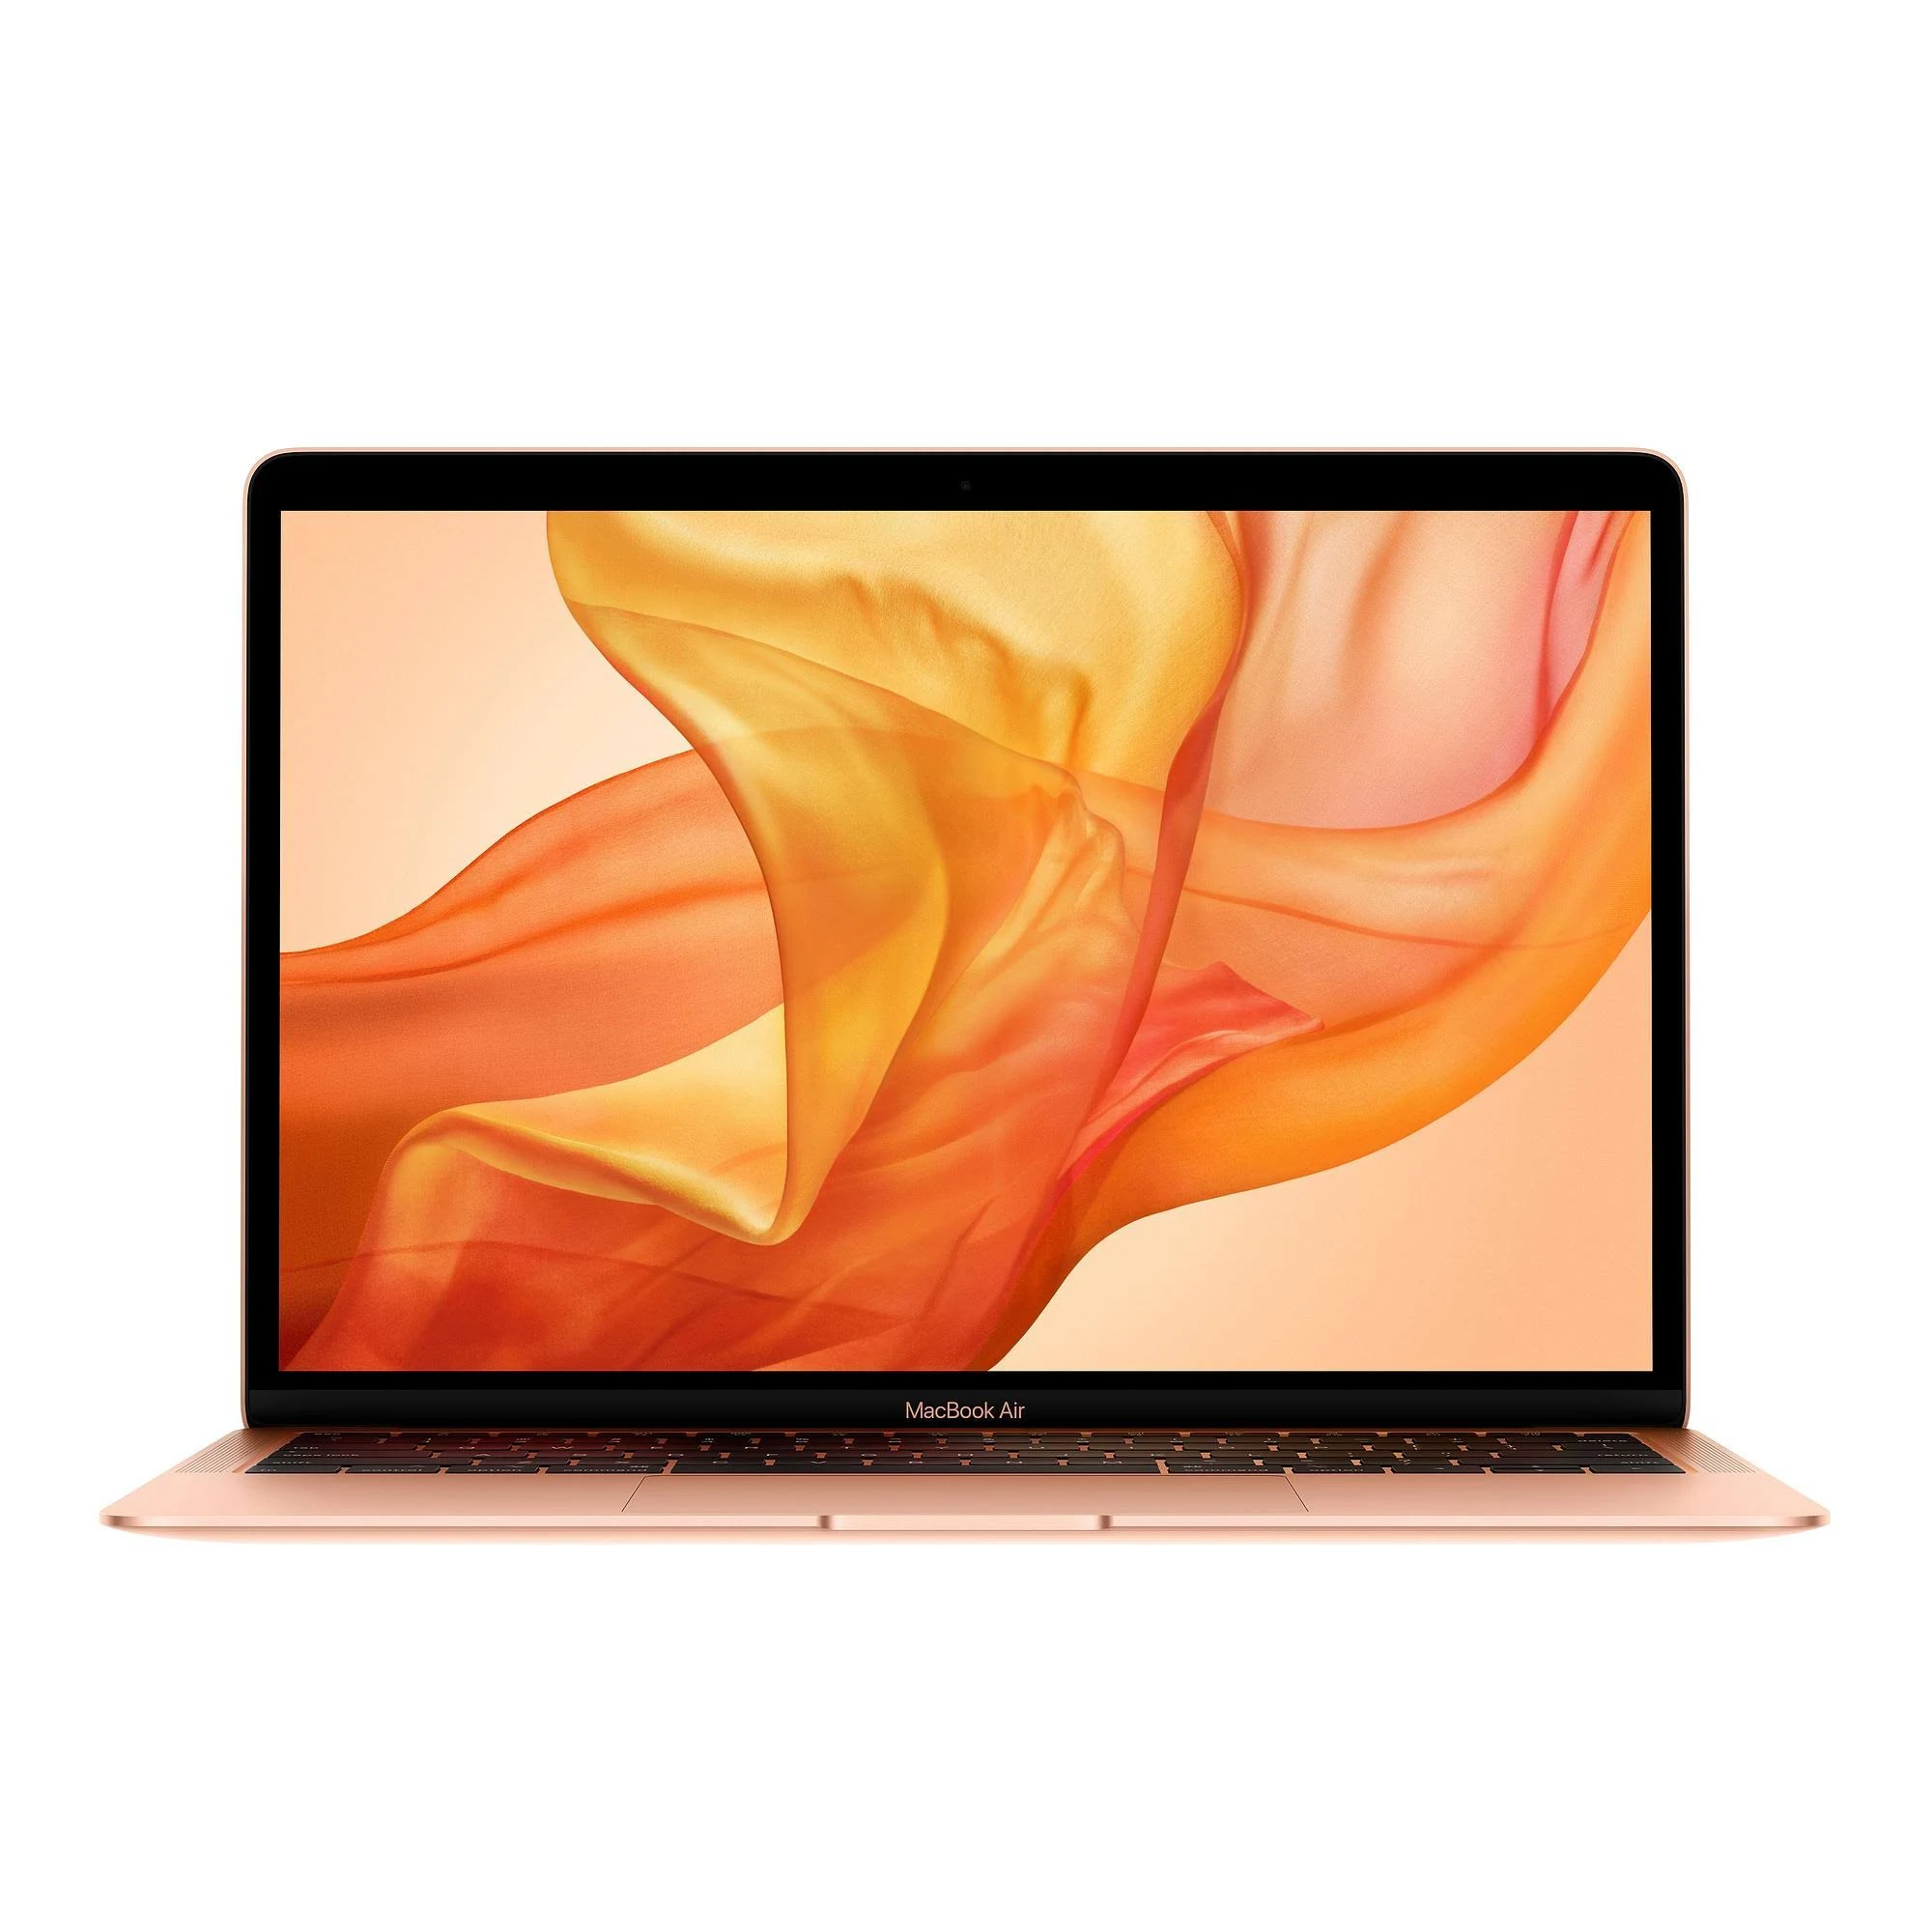 MacBook Air 13 inch True Tone 2019 i5 1.6GHz - 1TB SSD - 8GB Ram 1TB Gold Very Good